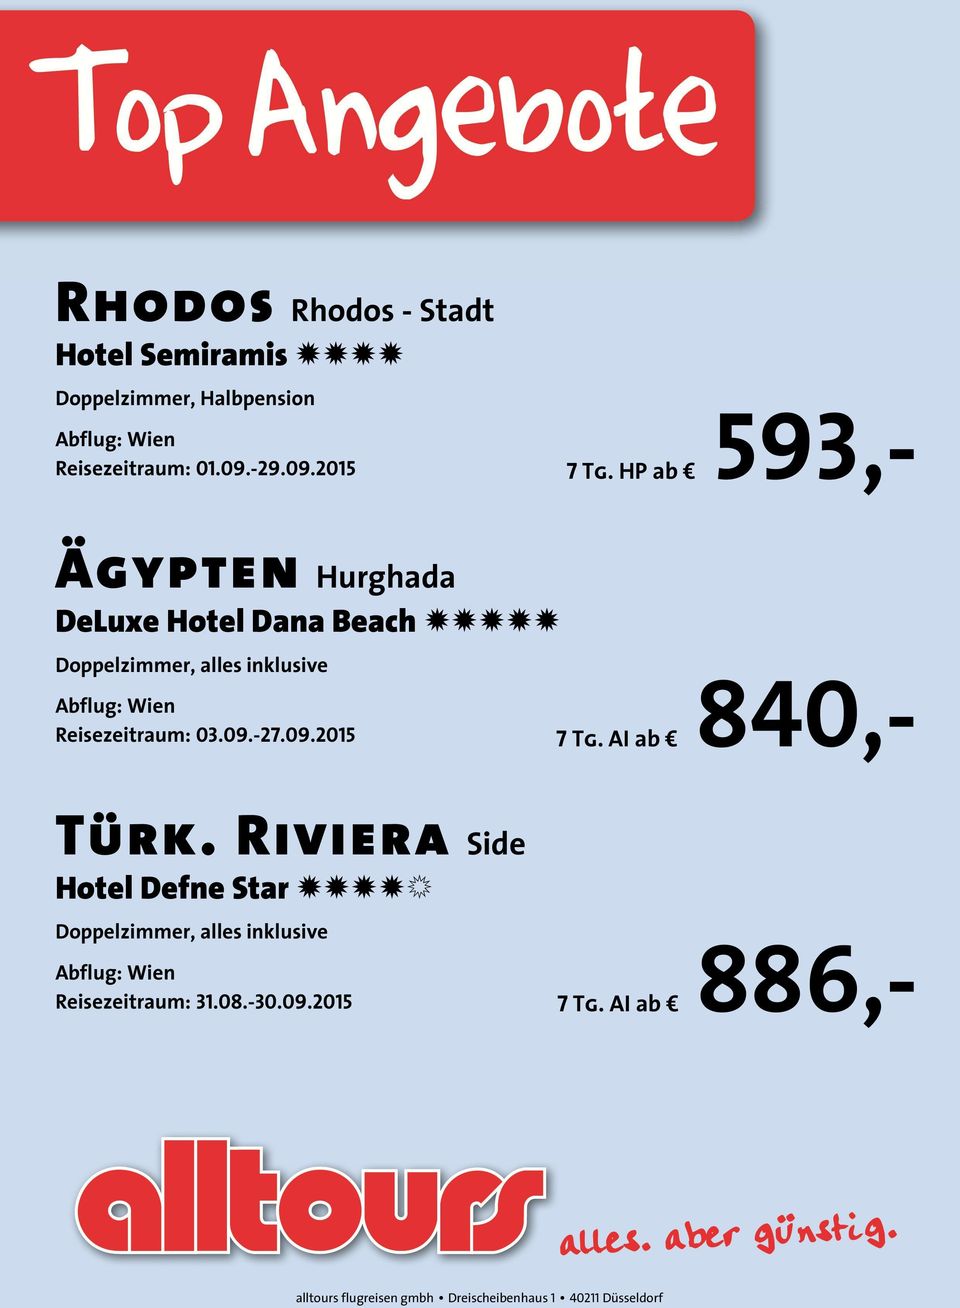 HP ab 593,- Ägypten Hurghada DeLuxe Hotel Dana Beach NNNNN Reisezeitraum: 03.